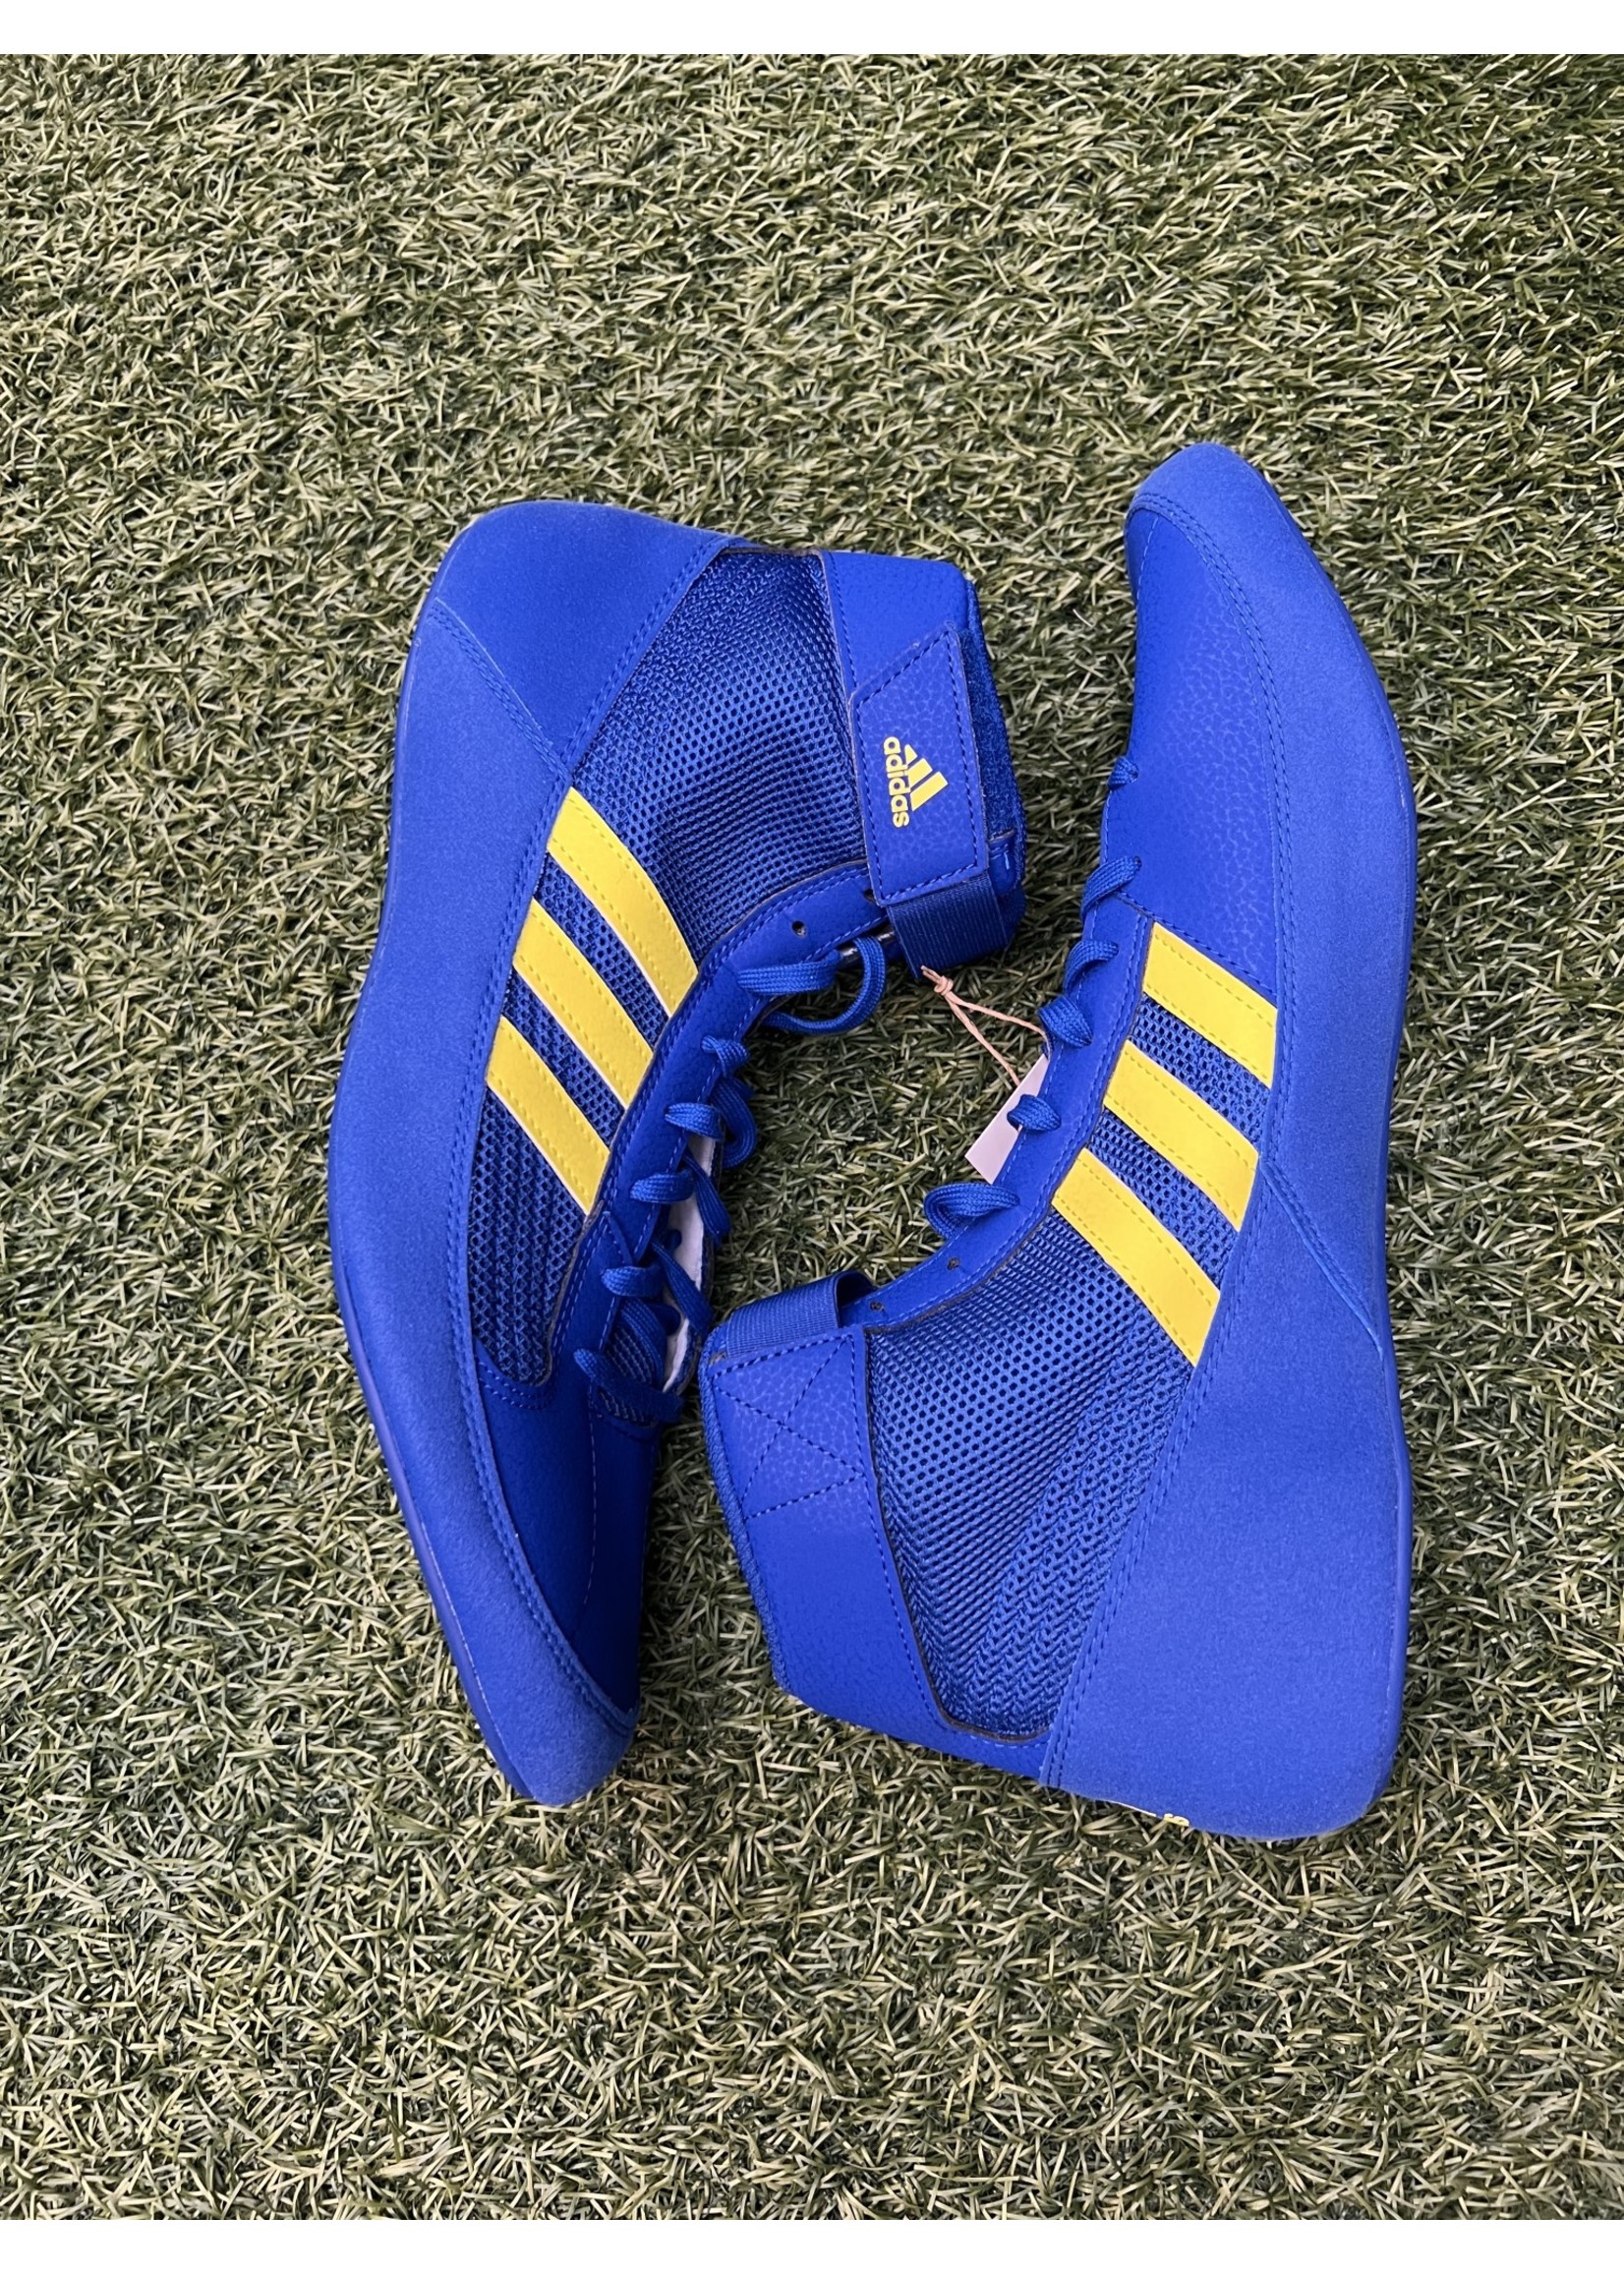 Adidas Adidas Hvc Size 6.5 Blue/Yellow